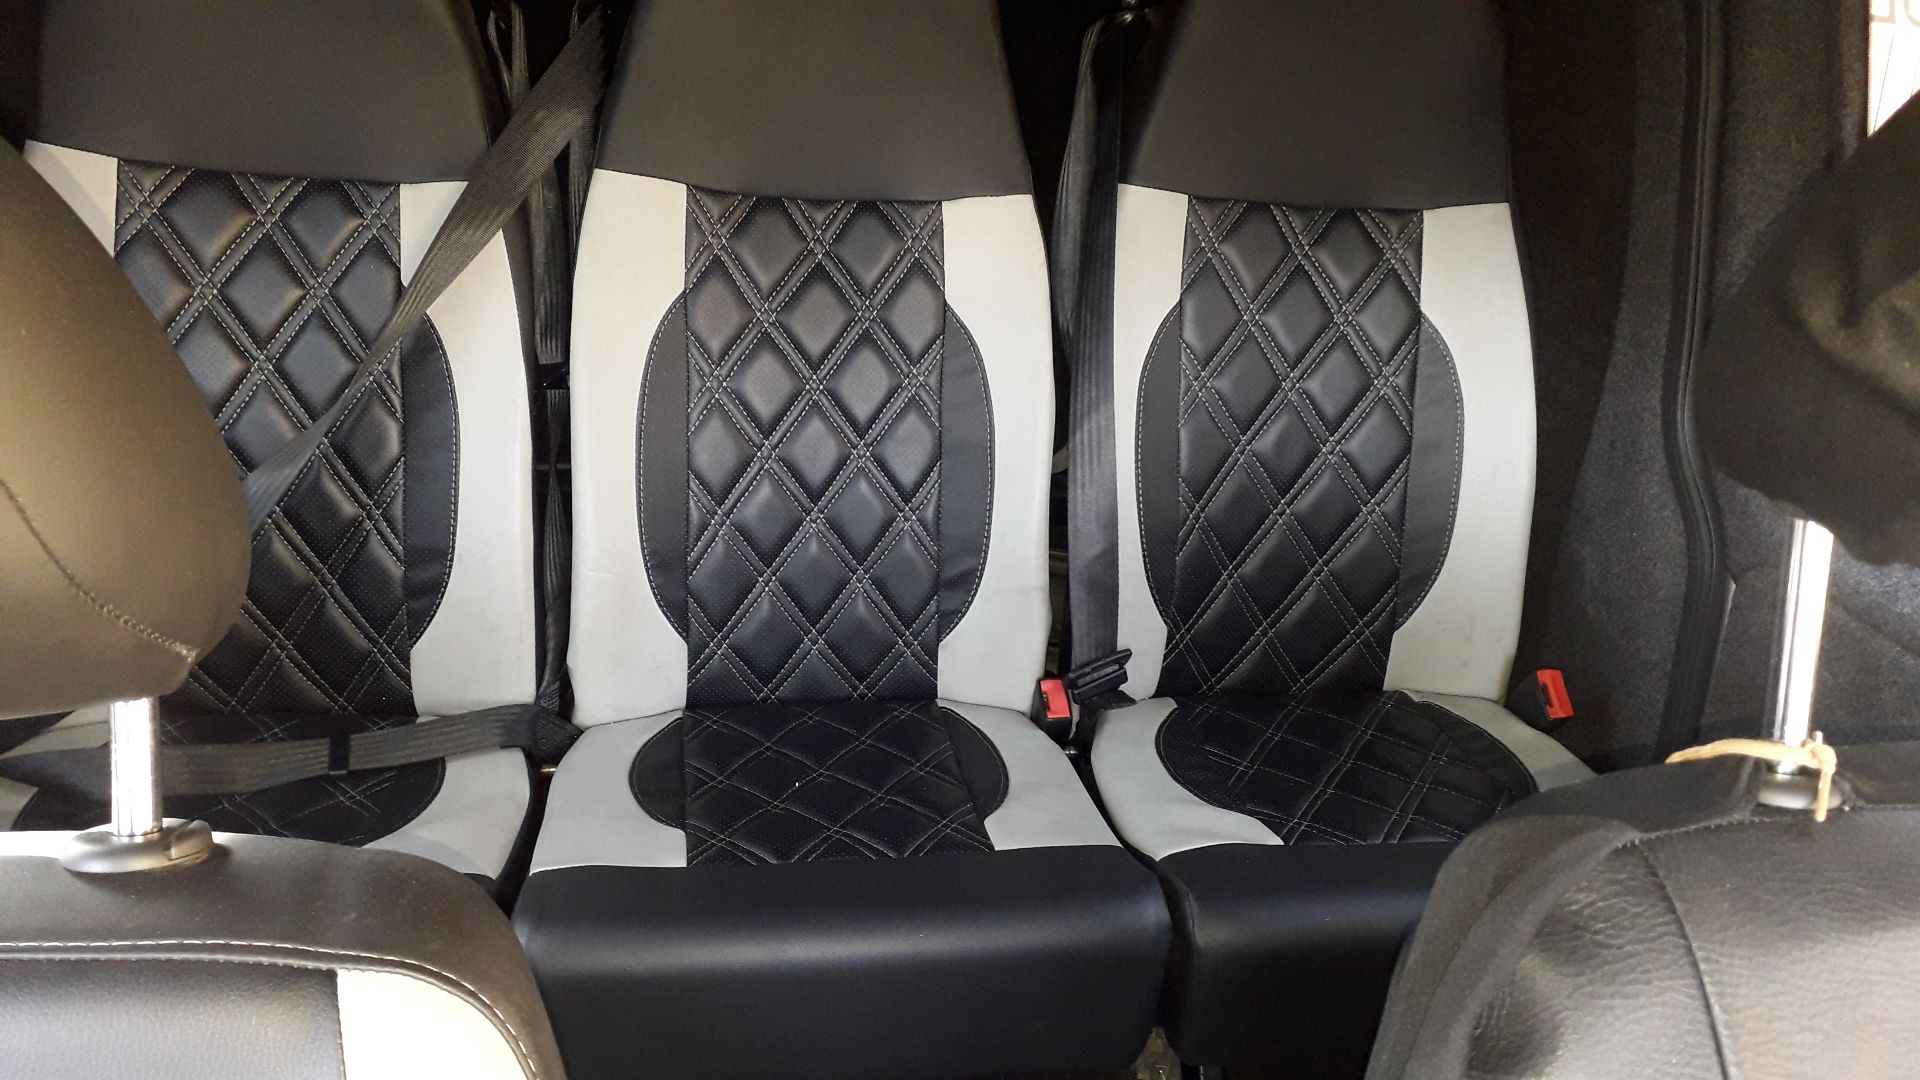 Volkswagen Caddy Maxi C20 1.6 TDi 102ps 5 Seat Hi-Line Van, 7 Speed Automatic Transmission, Registra - Image 15 of 22